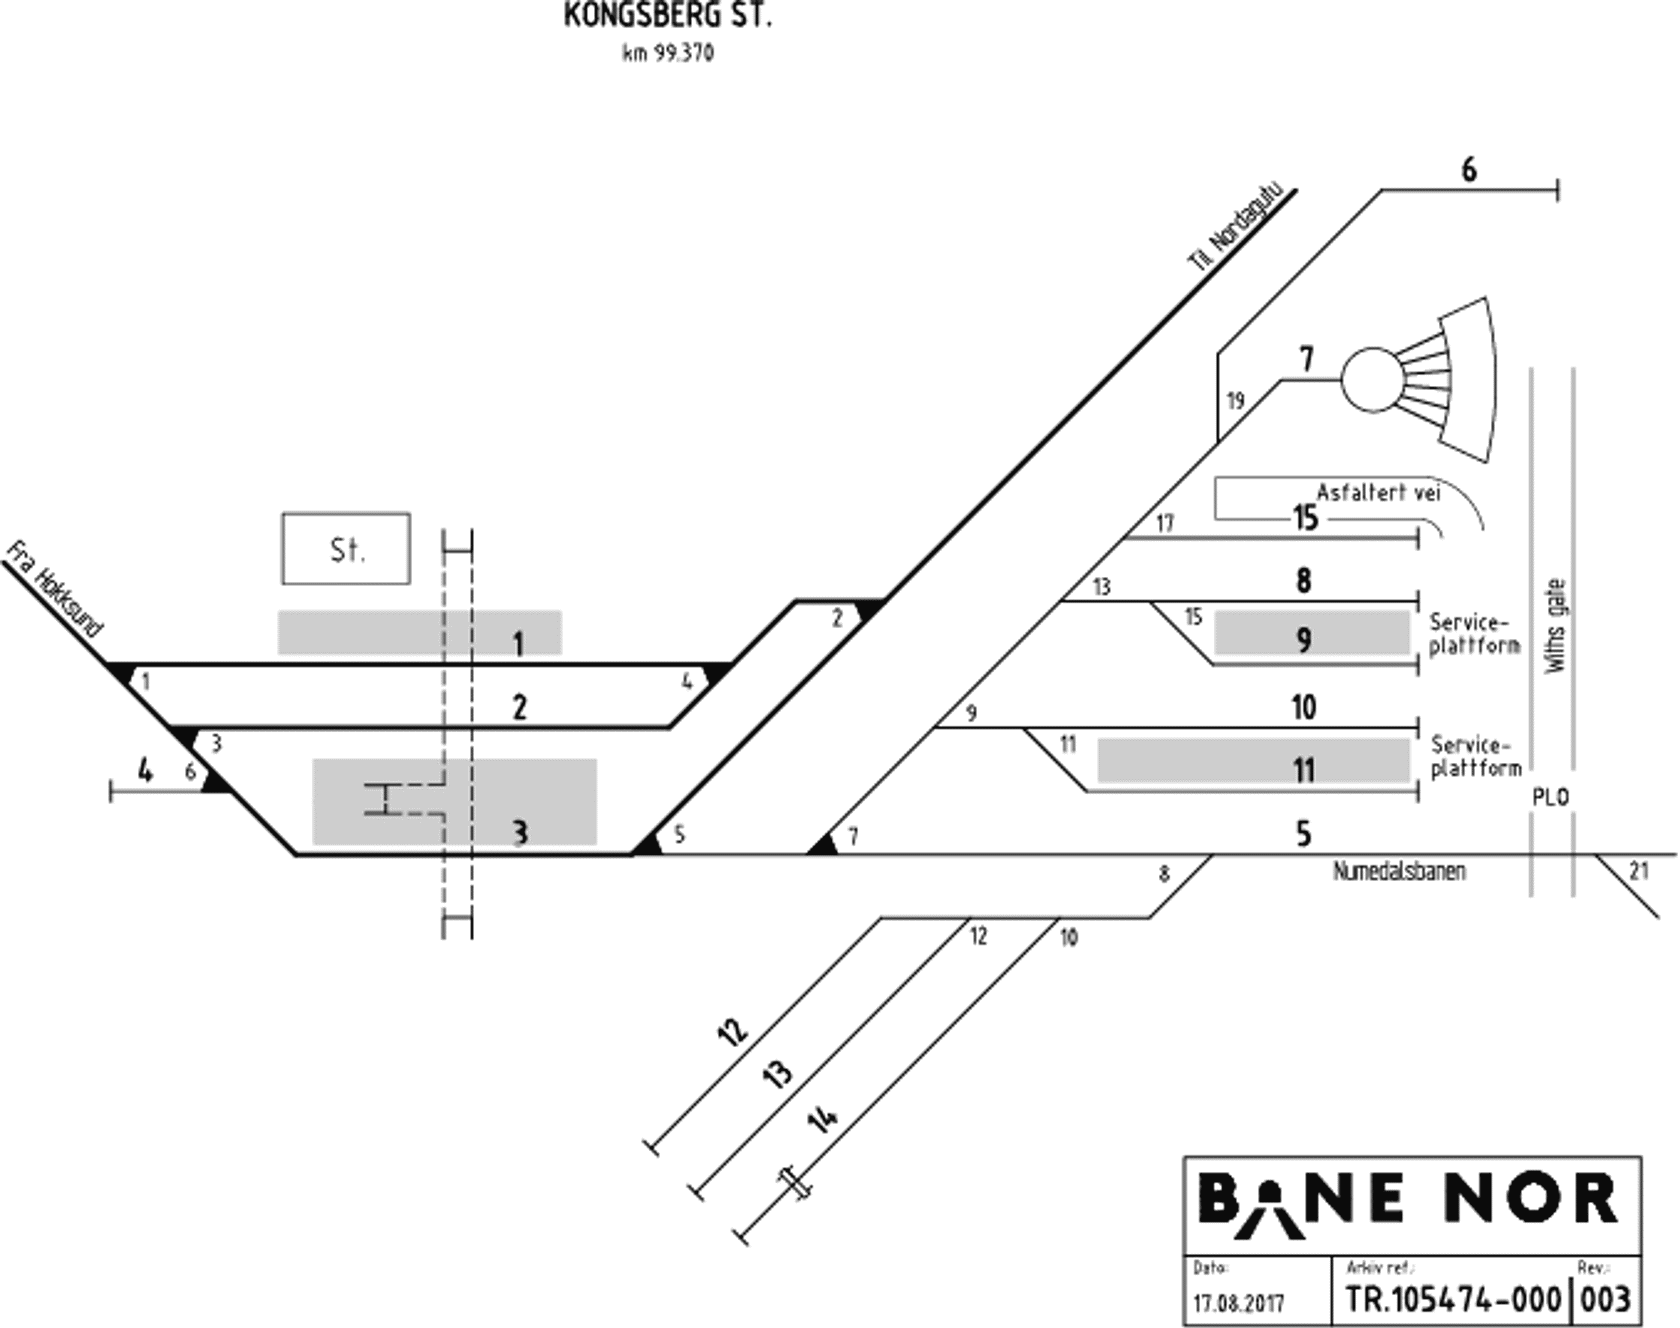 Track plan Kongsberg station